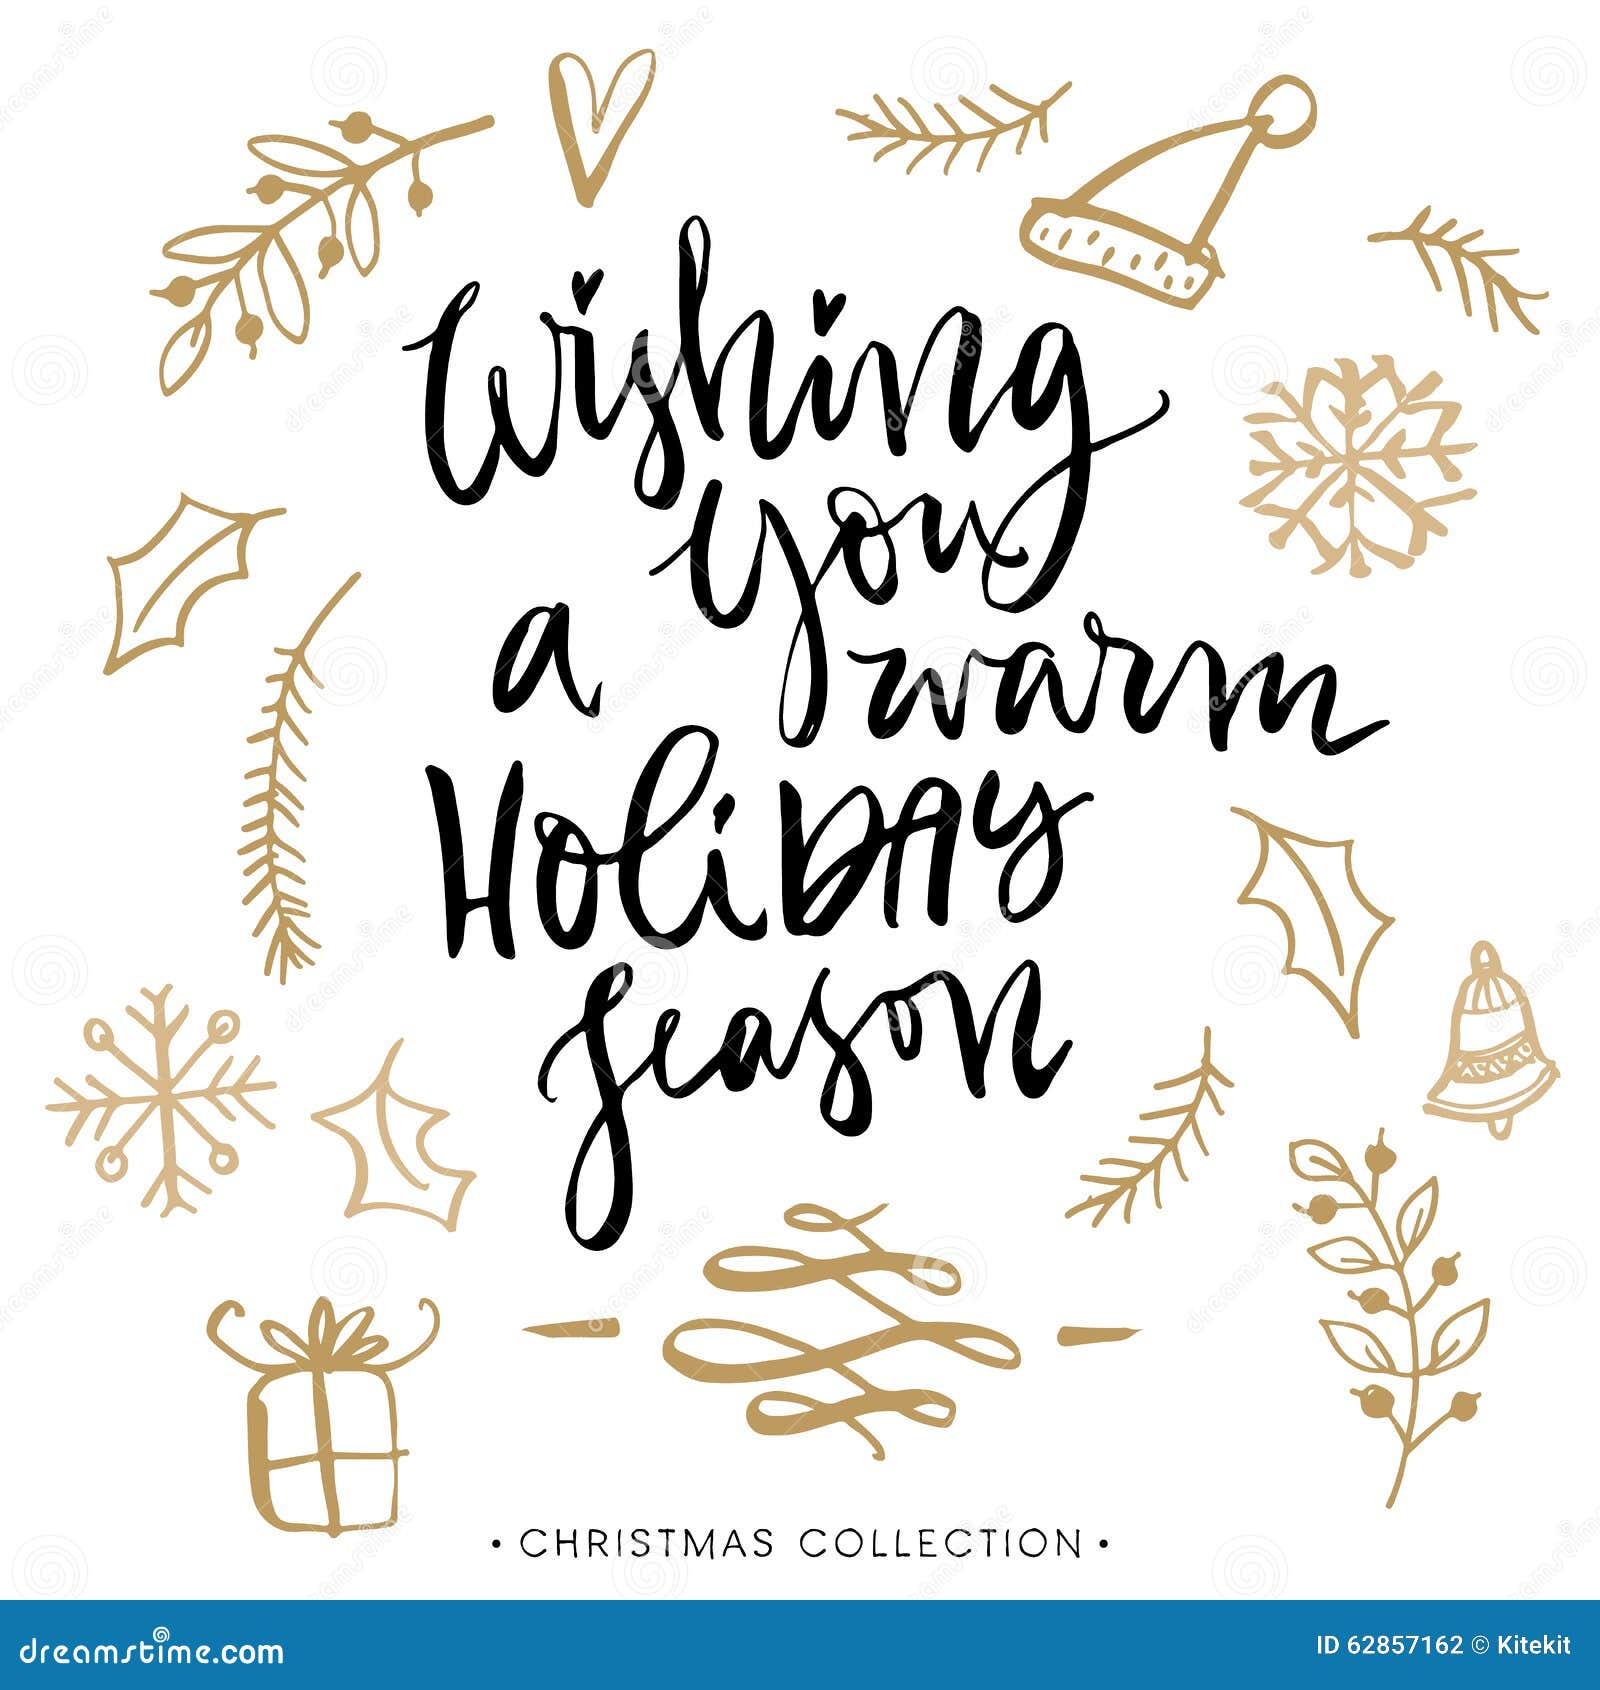 wishing you a warm holiday season. christmas greeting card.